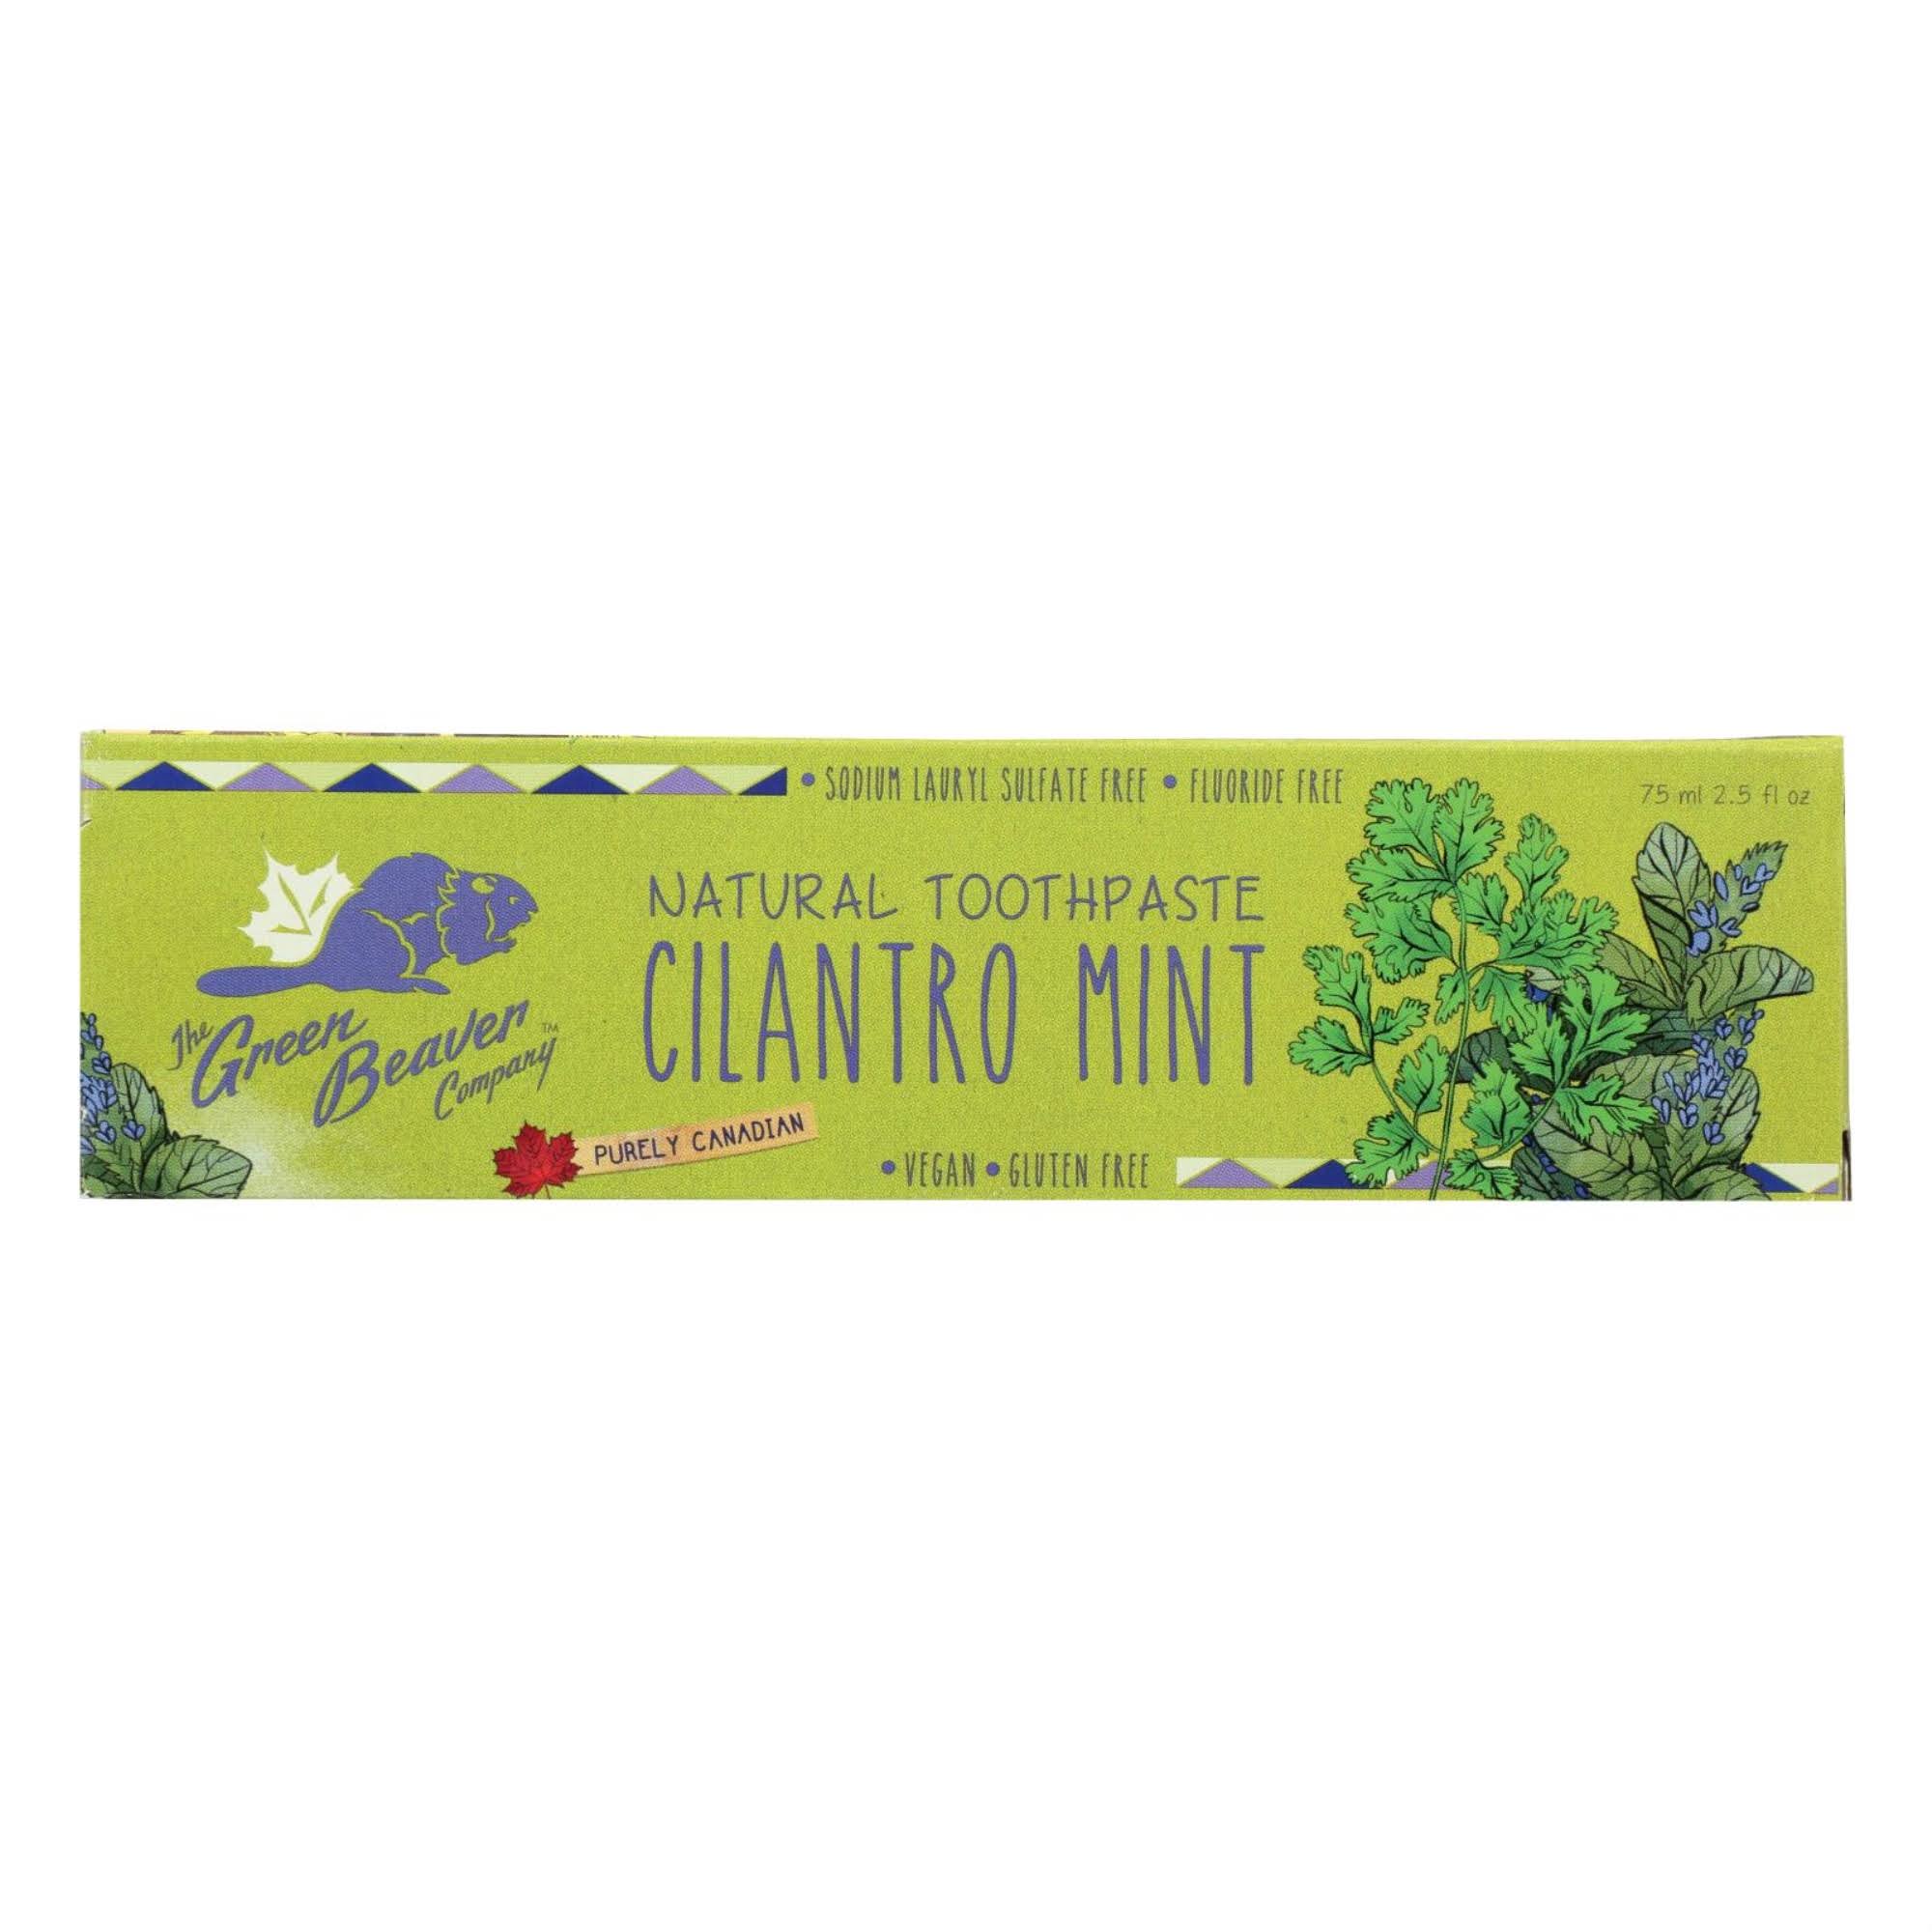 Green Beaver Natural Toothpaste - Cilantro Mint, 2.5oz